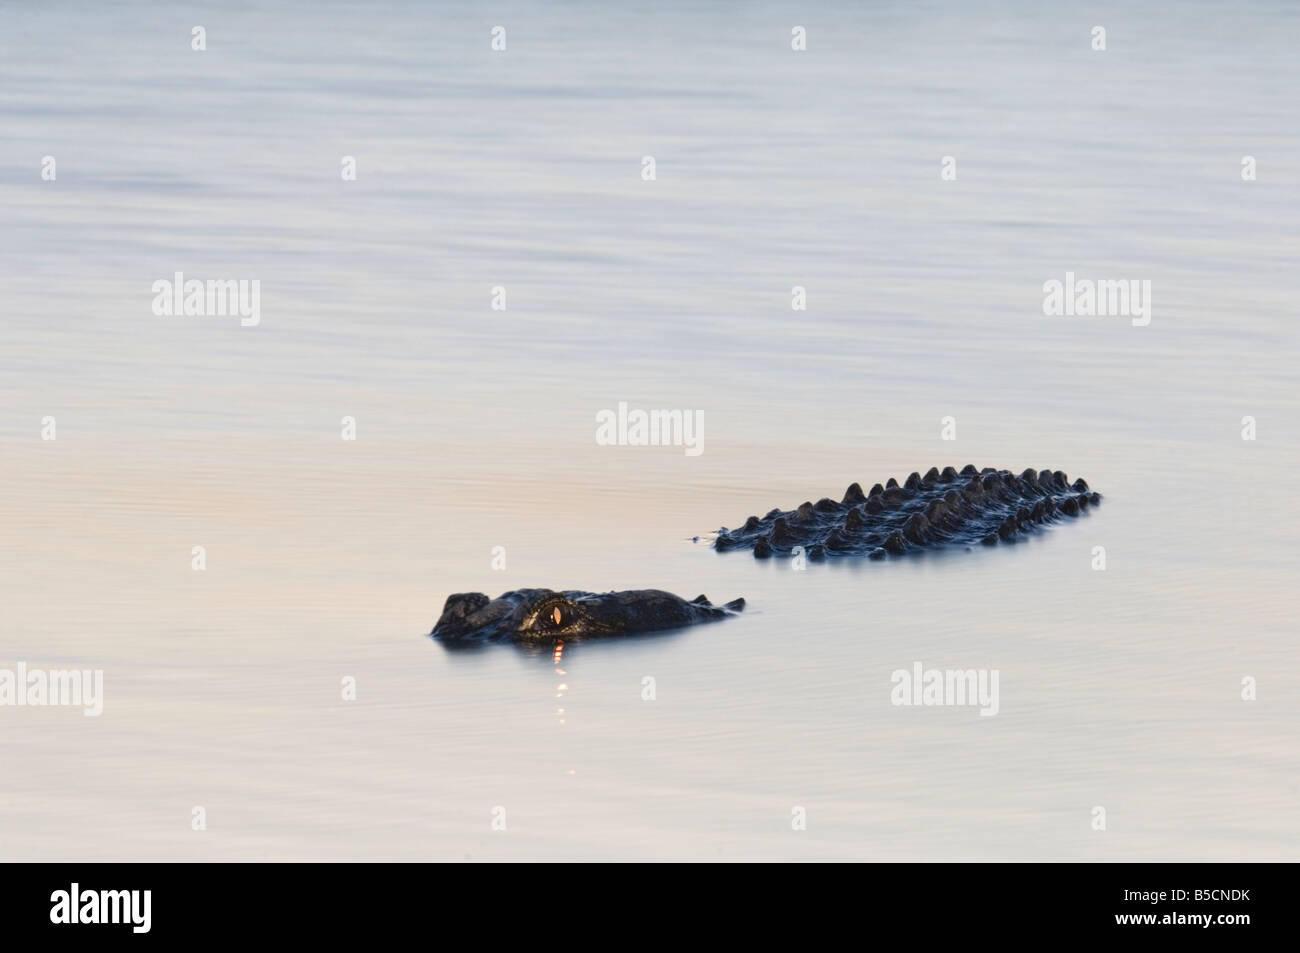 Alligator with glowing eyes Stock Photo - Alamy